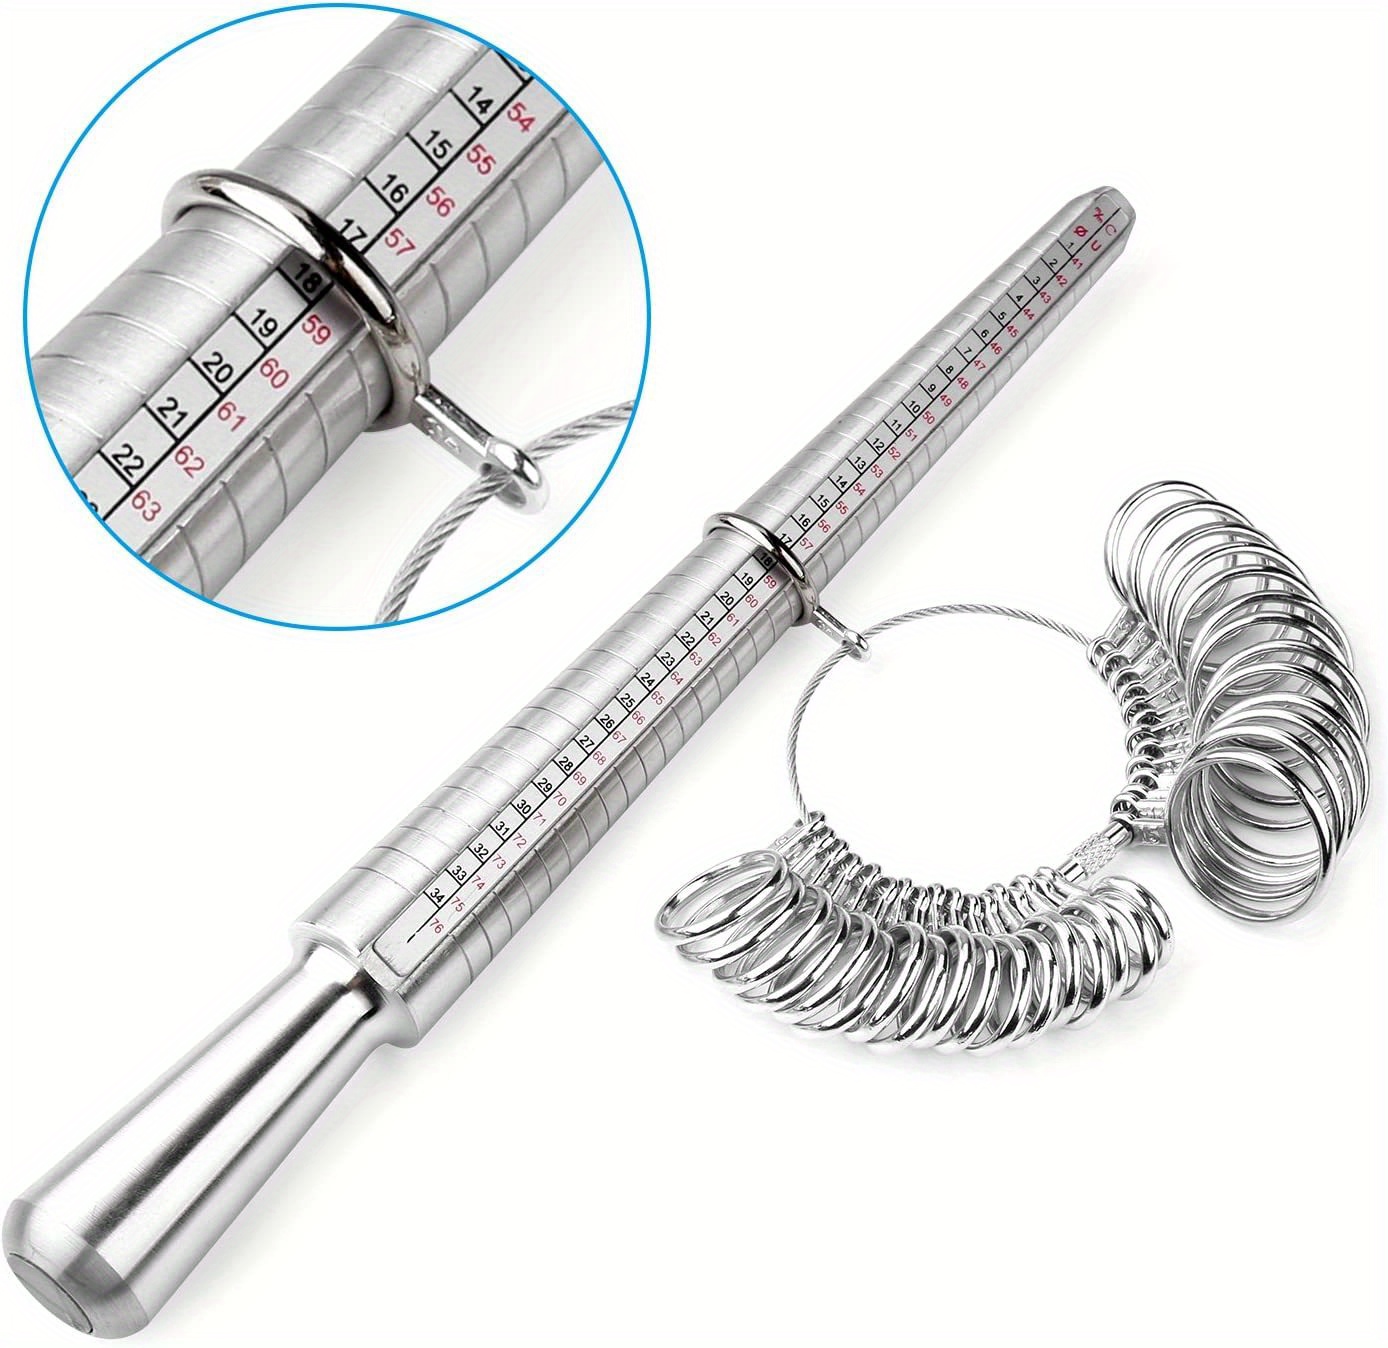 Gauges Finger Sizer Measuring Ring Tool White Stick $8.51 For Sale  [categories]